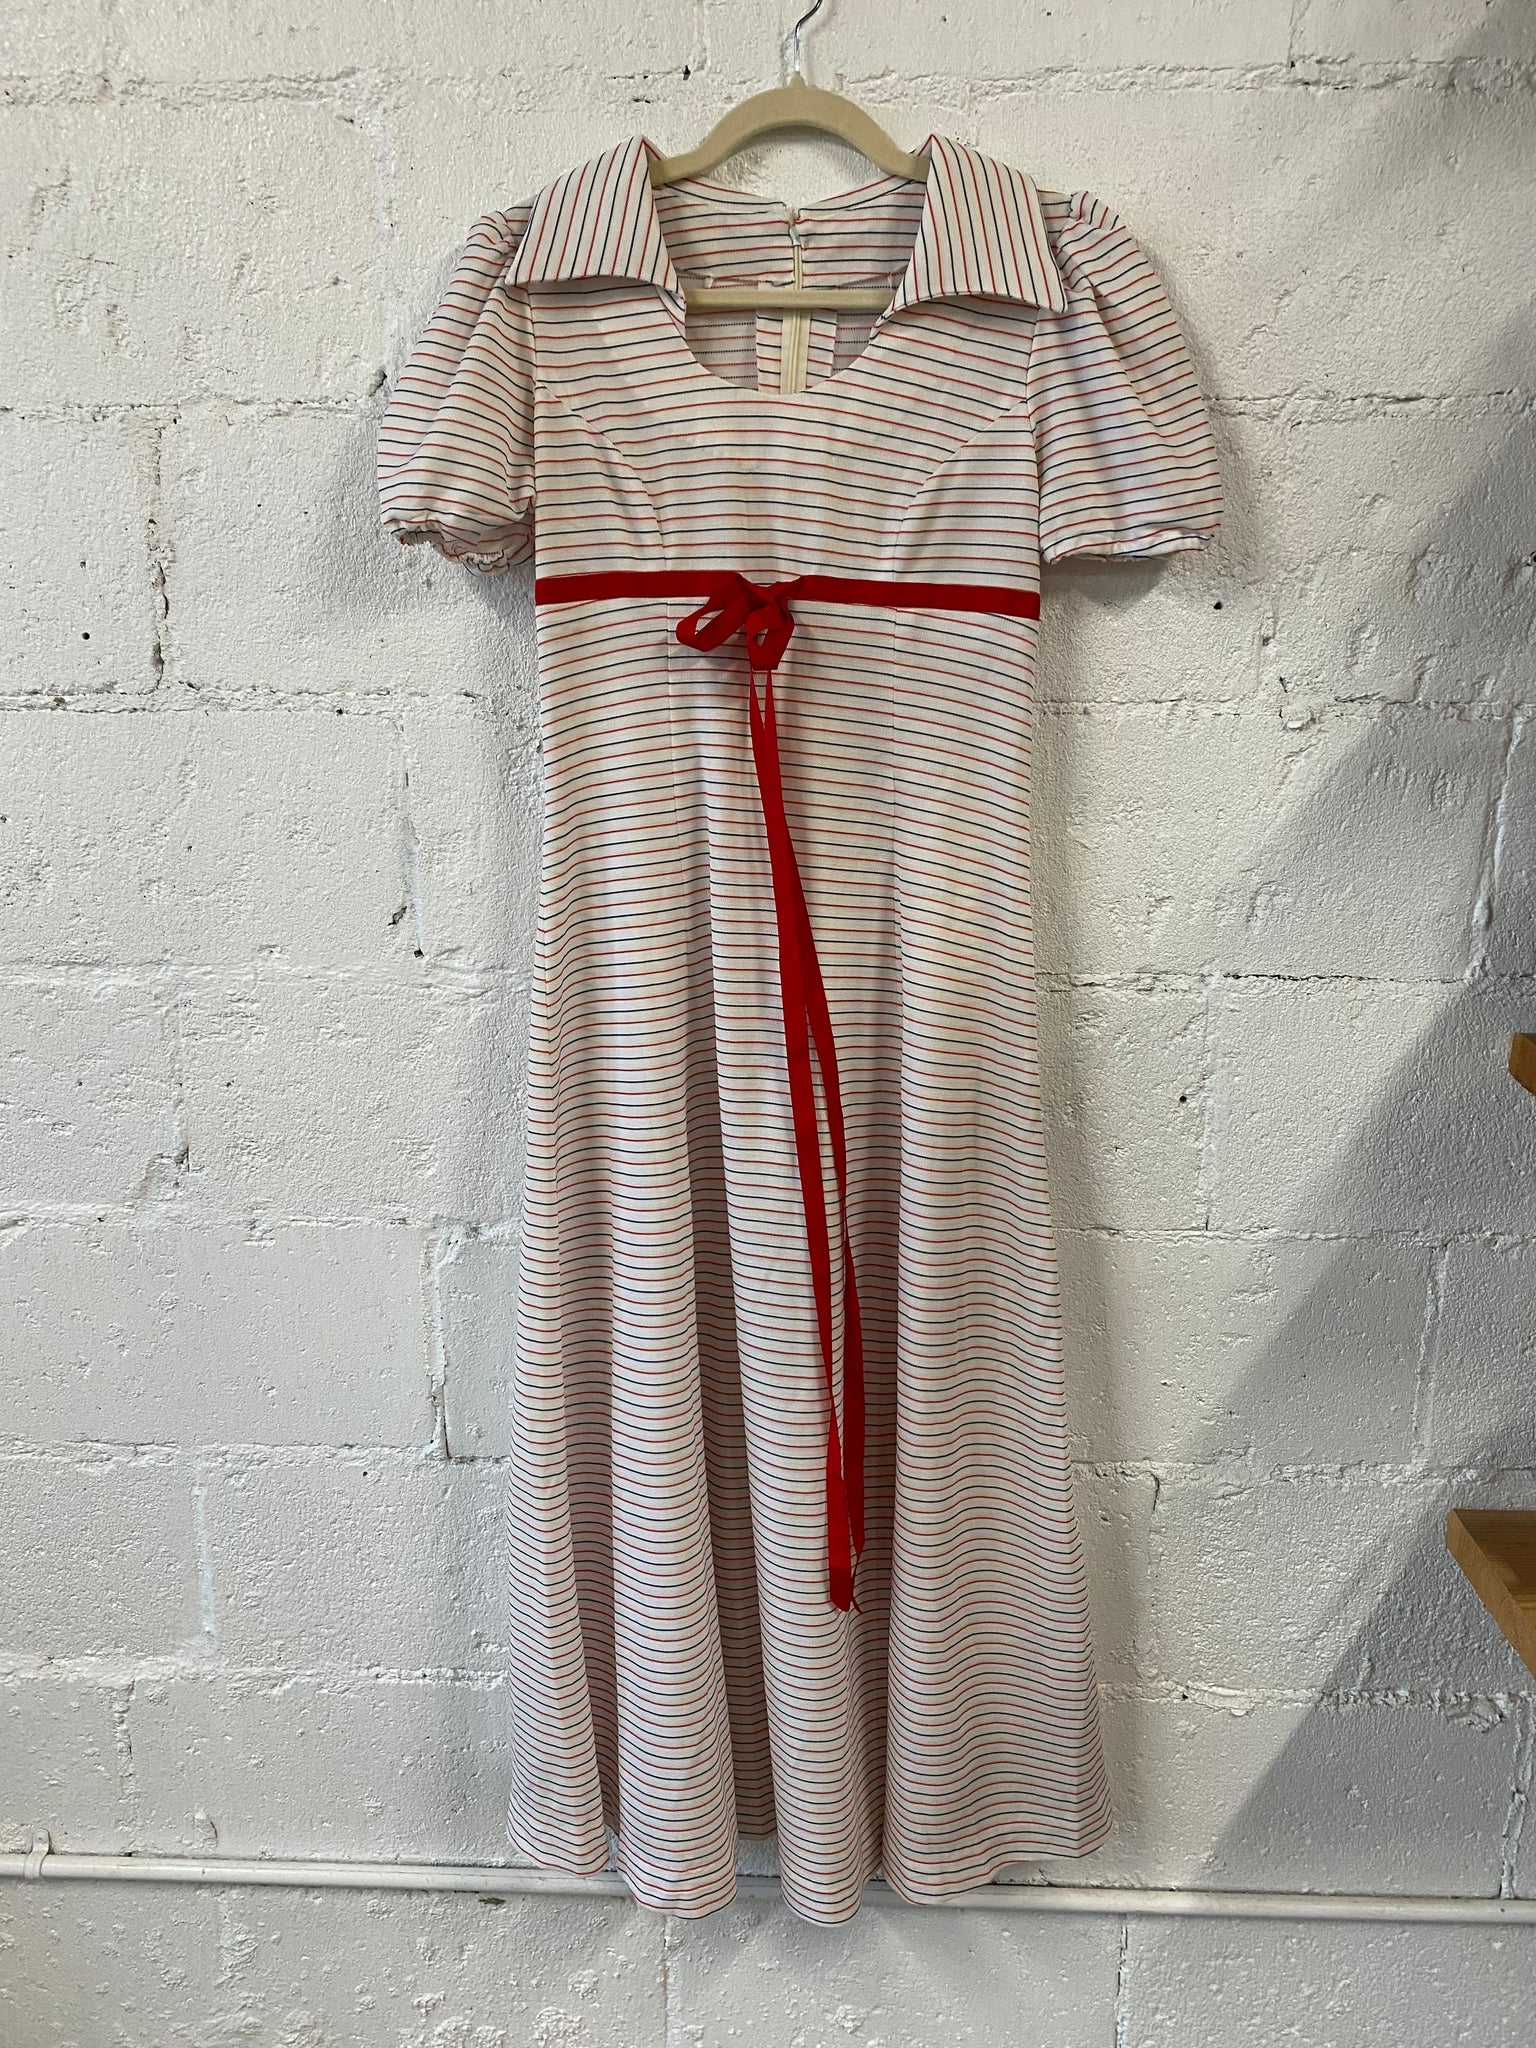 60's Handmade Striped Dress